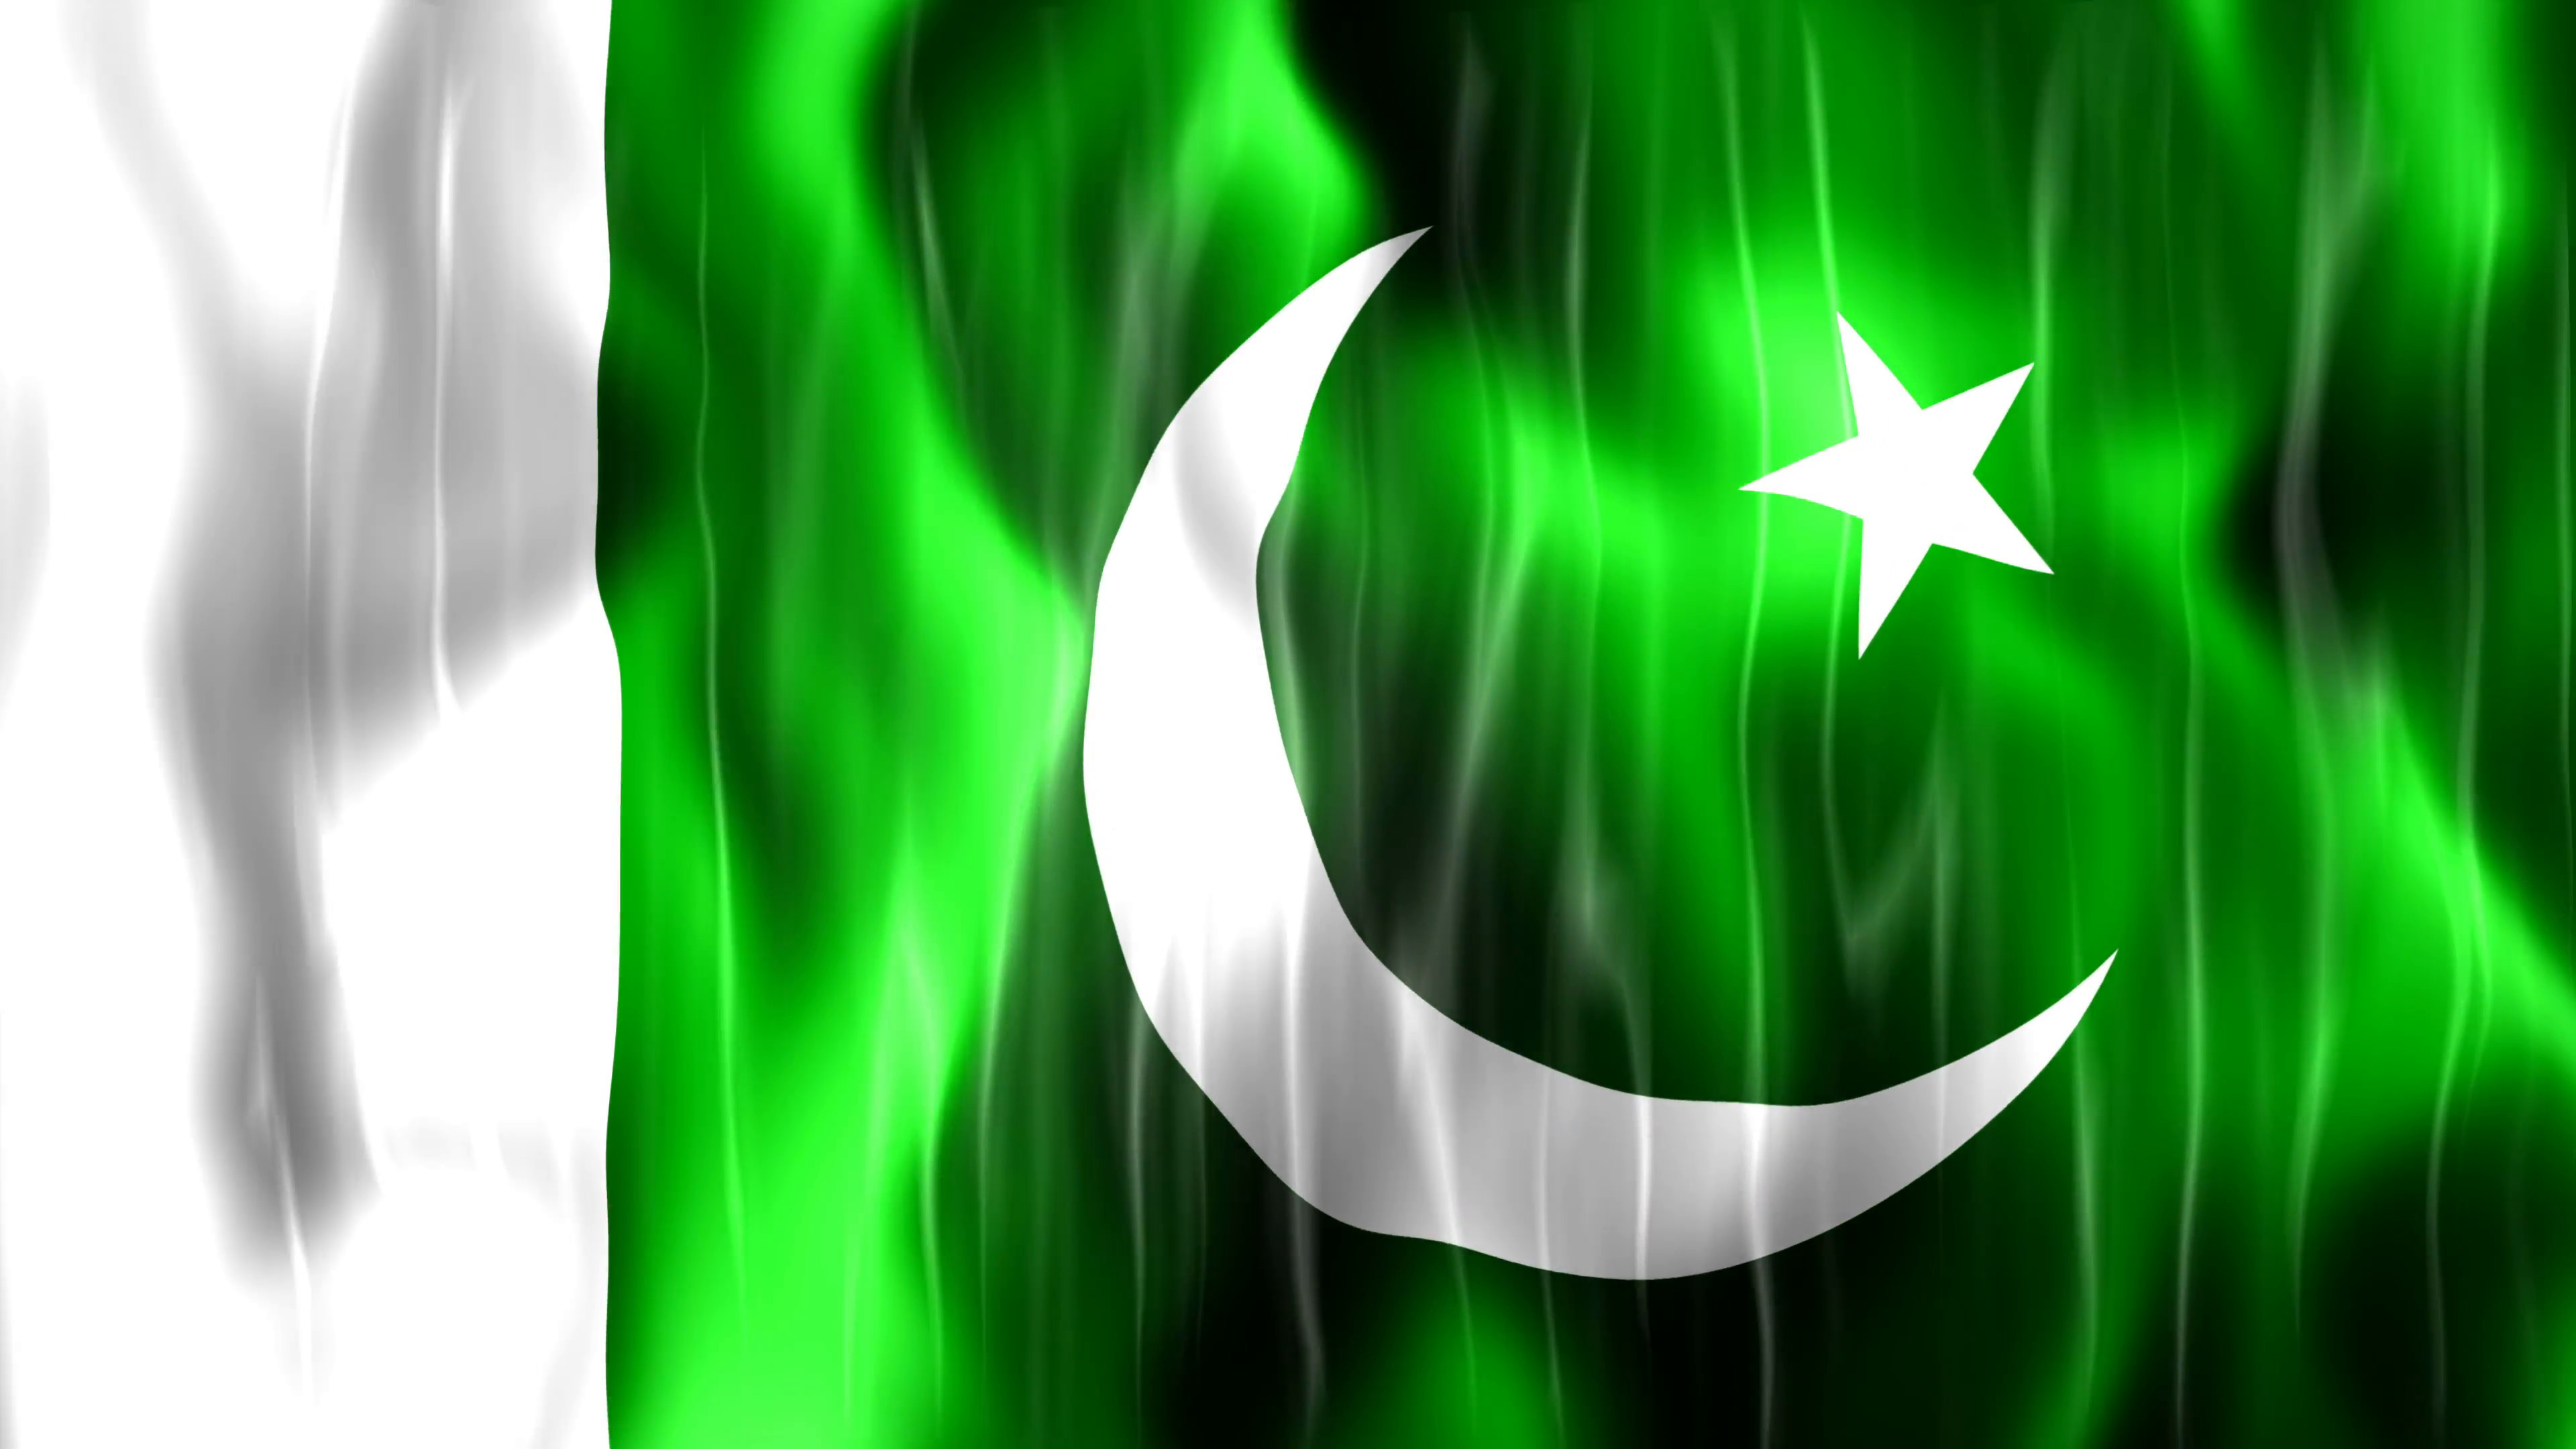 wallpaper-pakistan-flag-2018-63-images